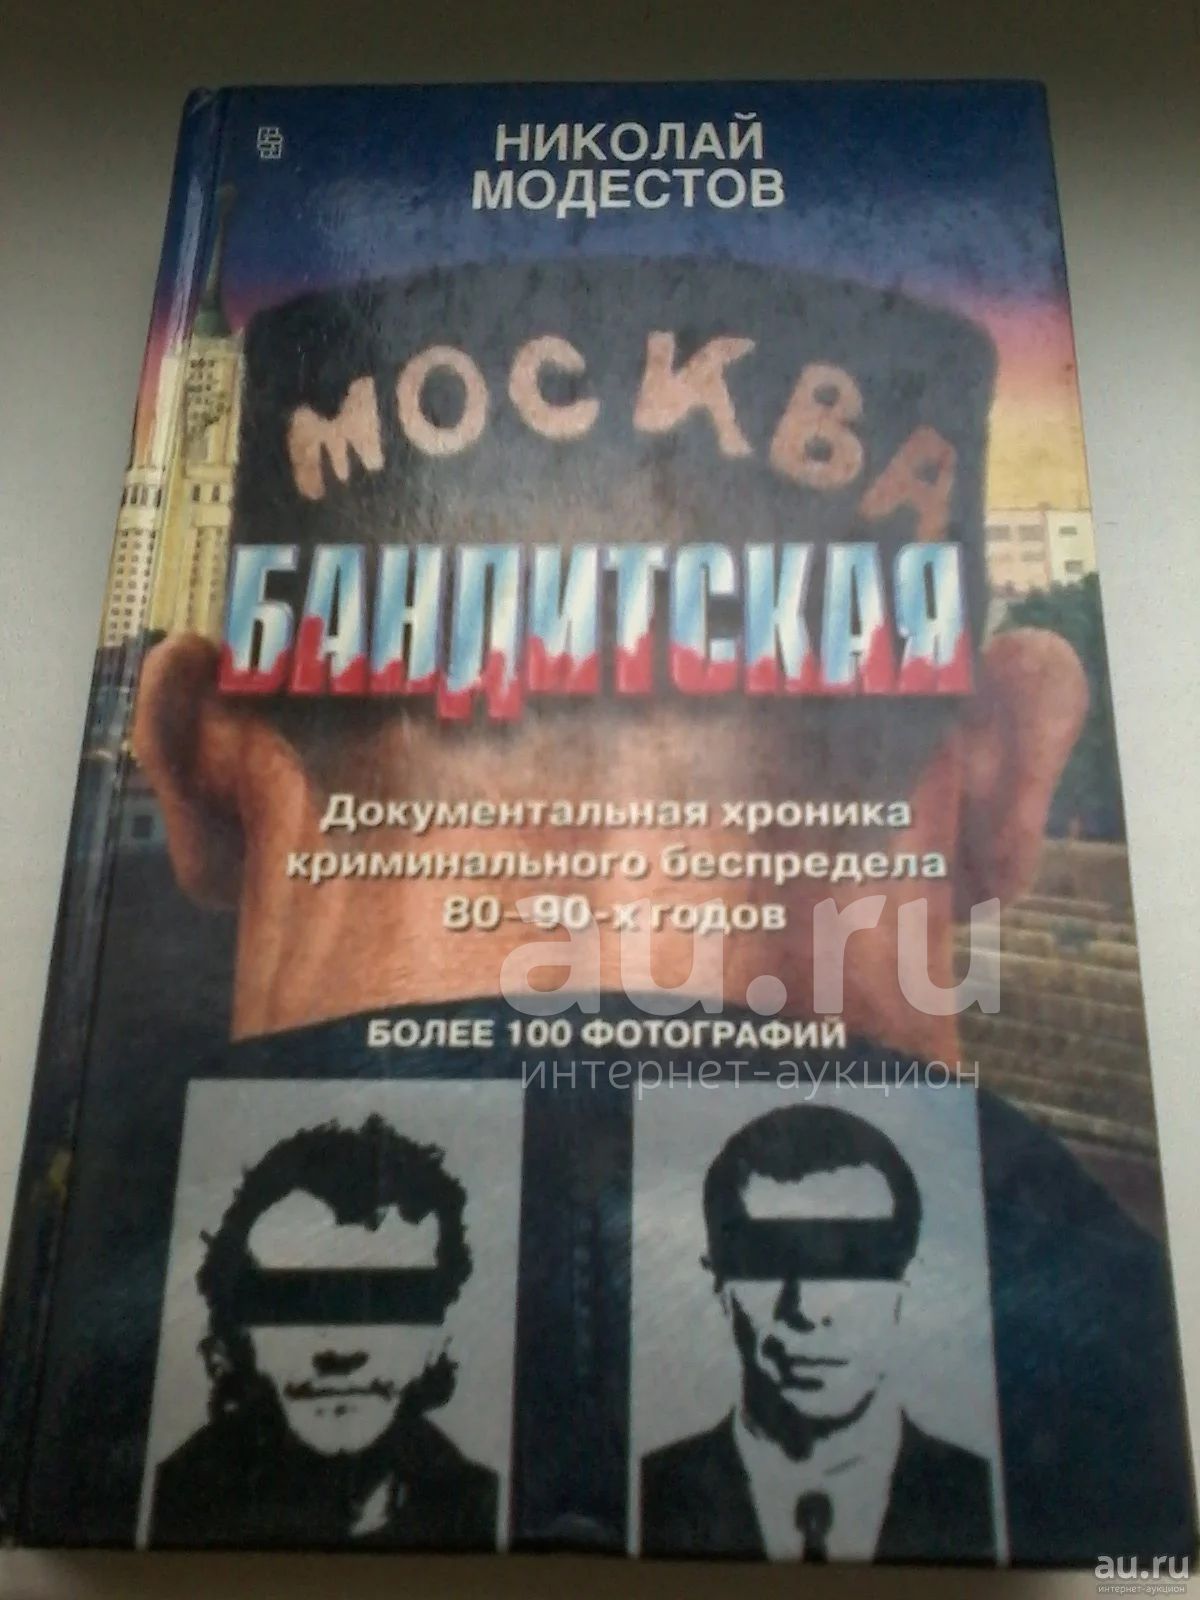 Книги бандитах аудиокниги. Москва бандитская книга. Москва бандитская 1-2 книга. Москва бандитская книга читать.